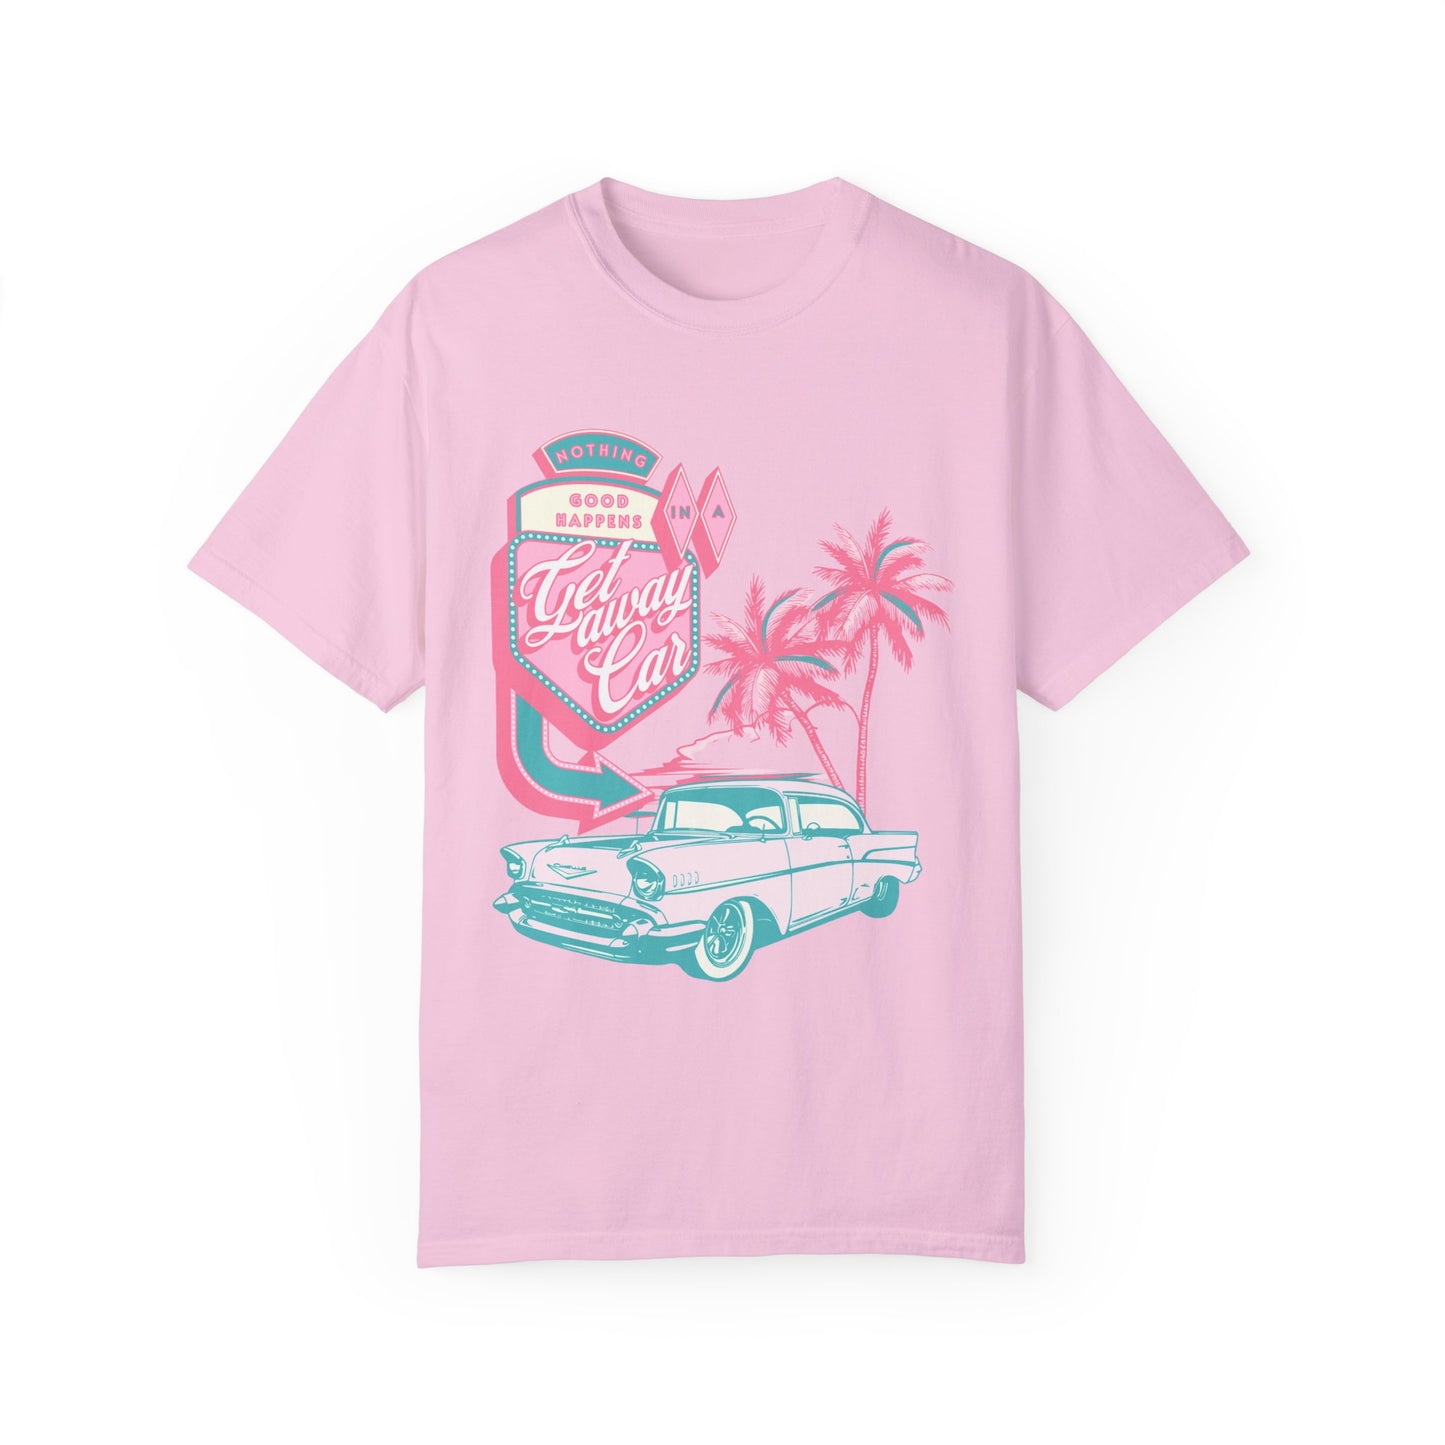 Getaway Car - T-shirt